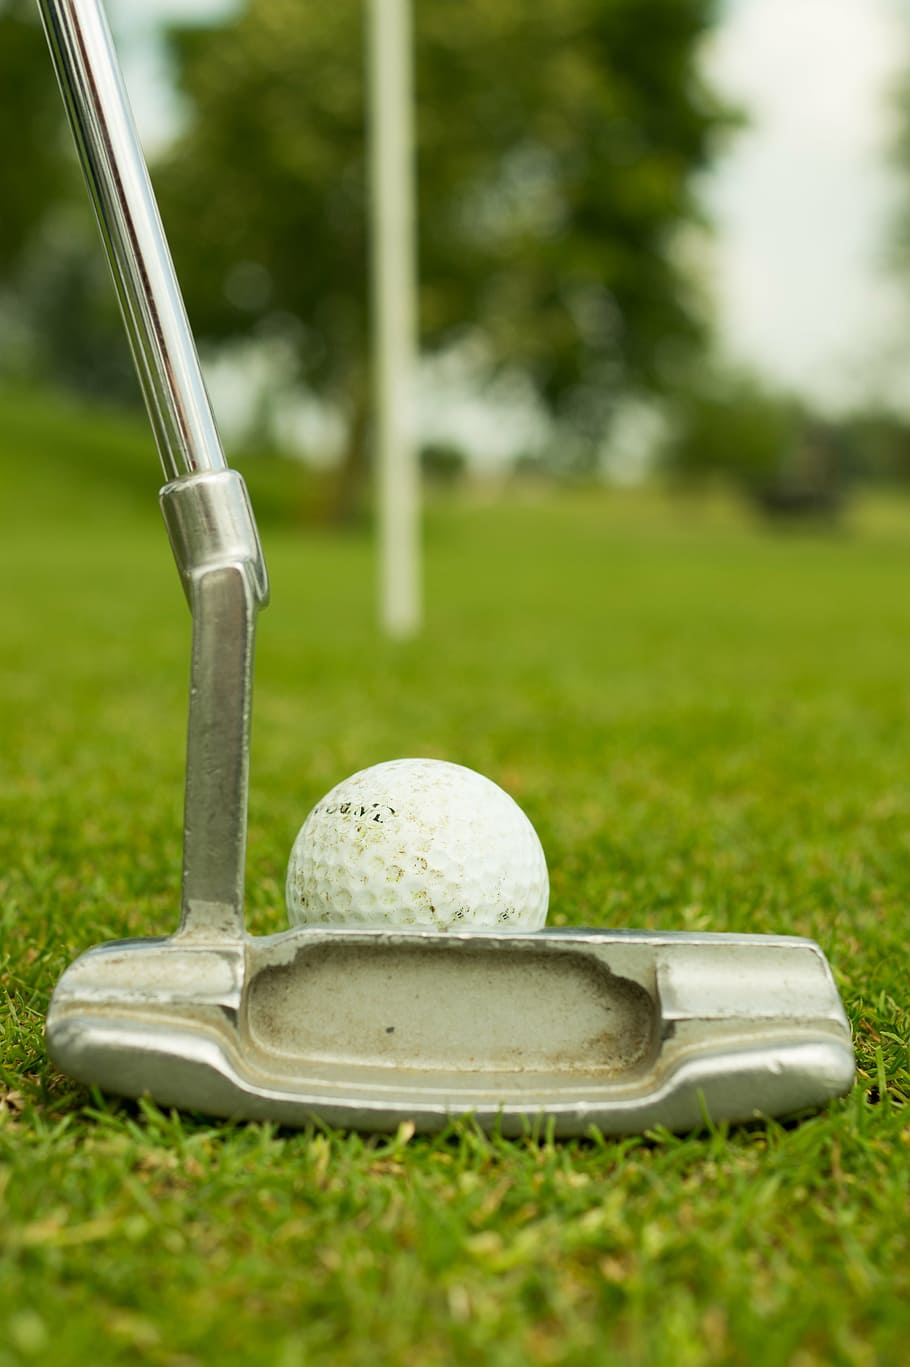 abu-abu, putter golf, putih, bola emas, hijau, fotografi fokus selektif rumput, siang hari, tahan karat, baja, golf